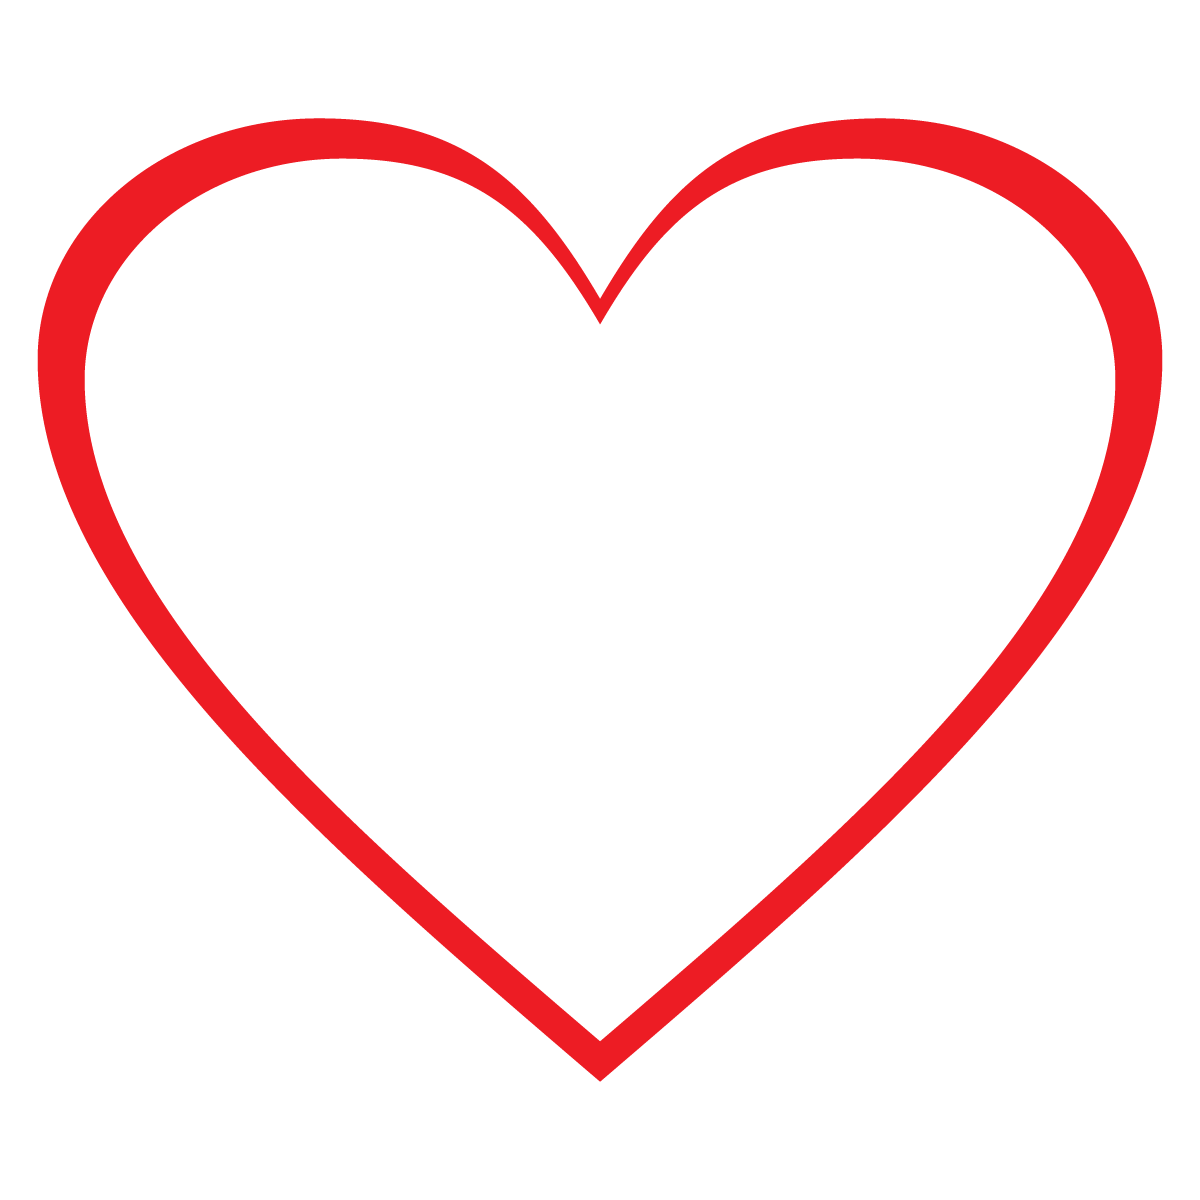 Heart clipart, Heart clip art romantic for Love, Graphics ...